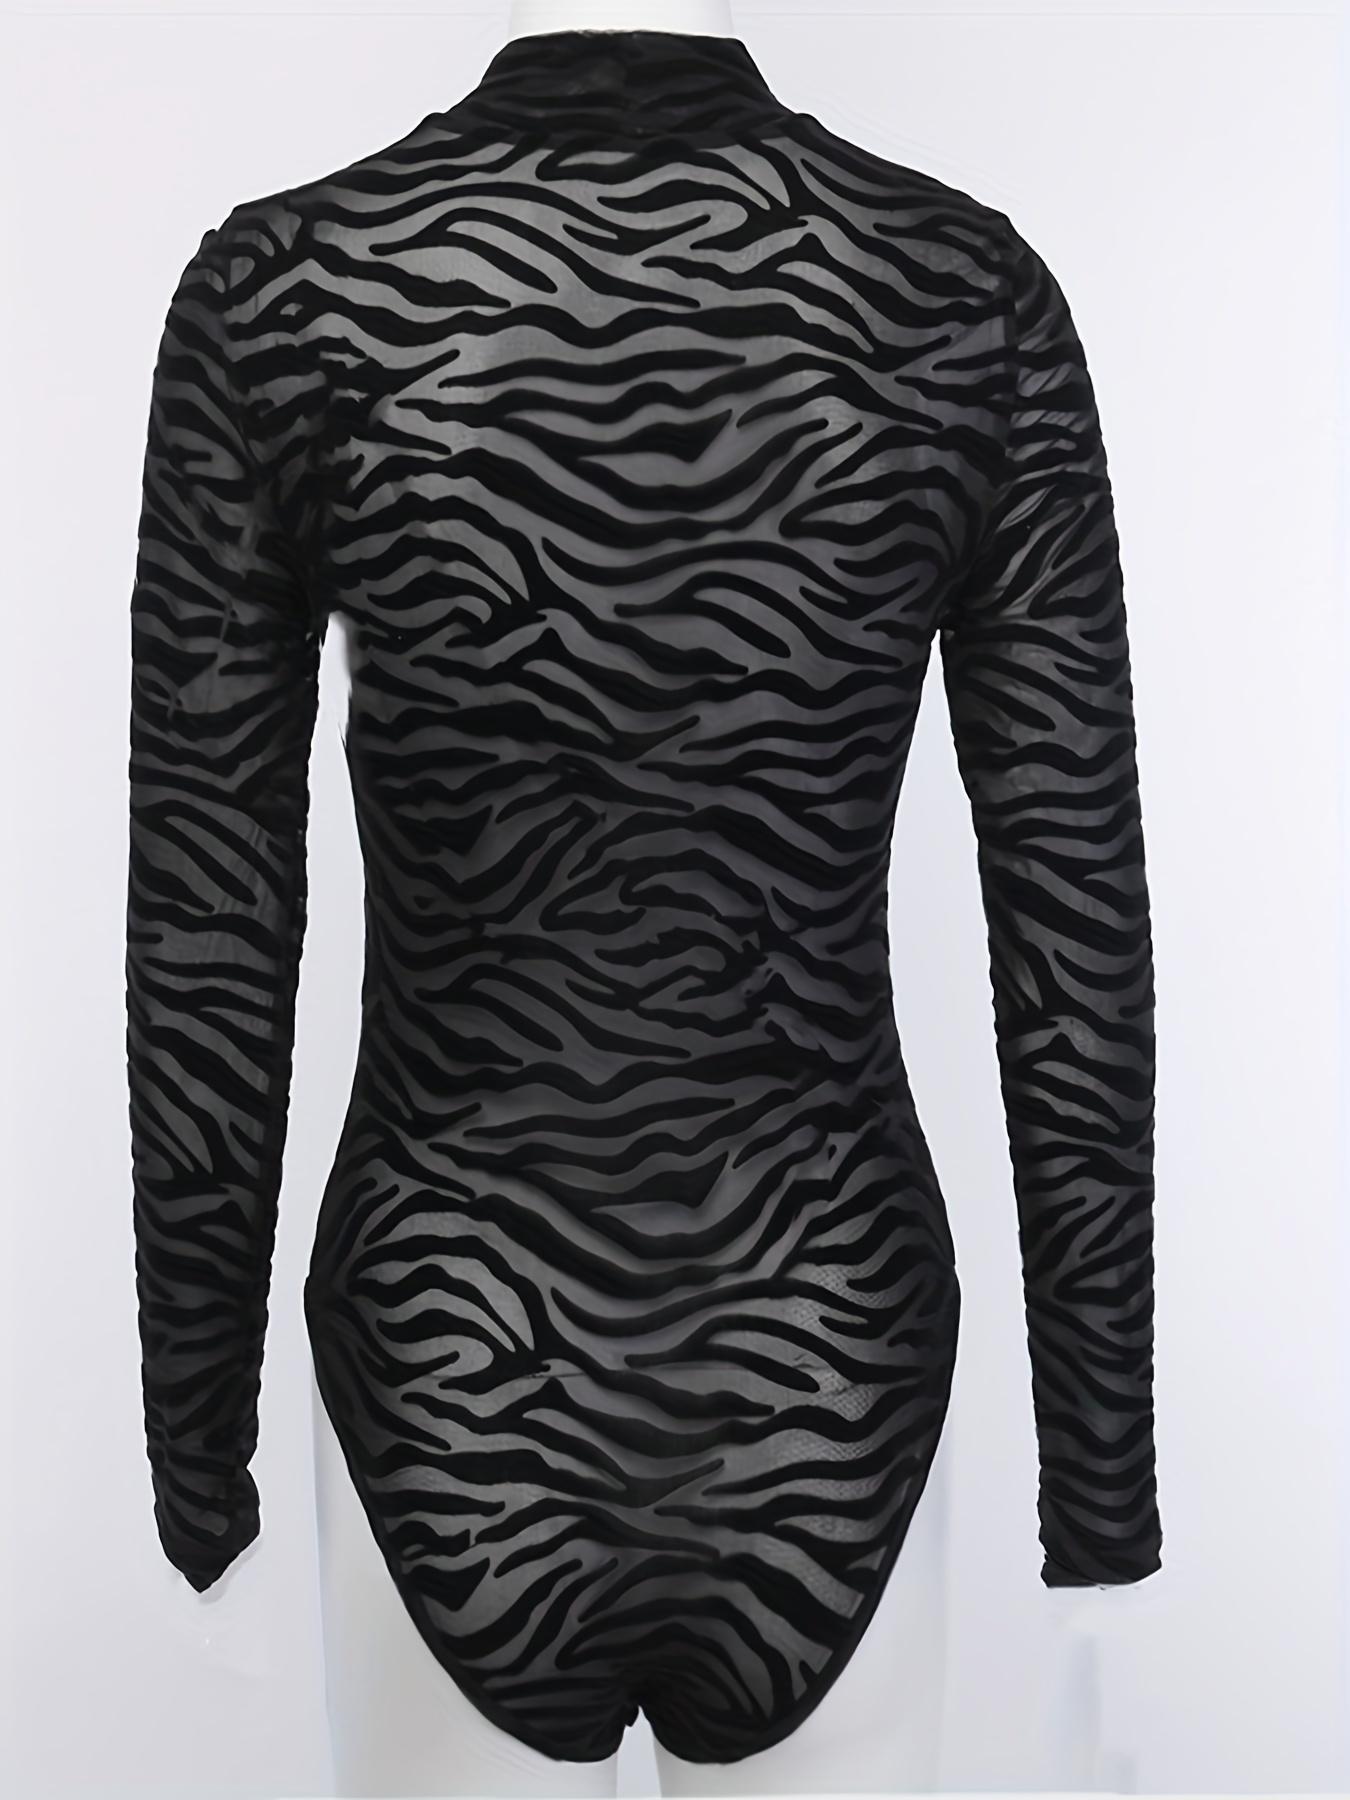 Black Body Print Long Sleeve Bodysuit, Tops